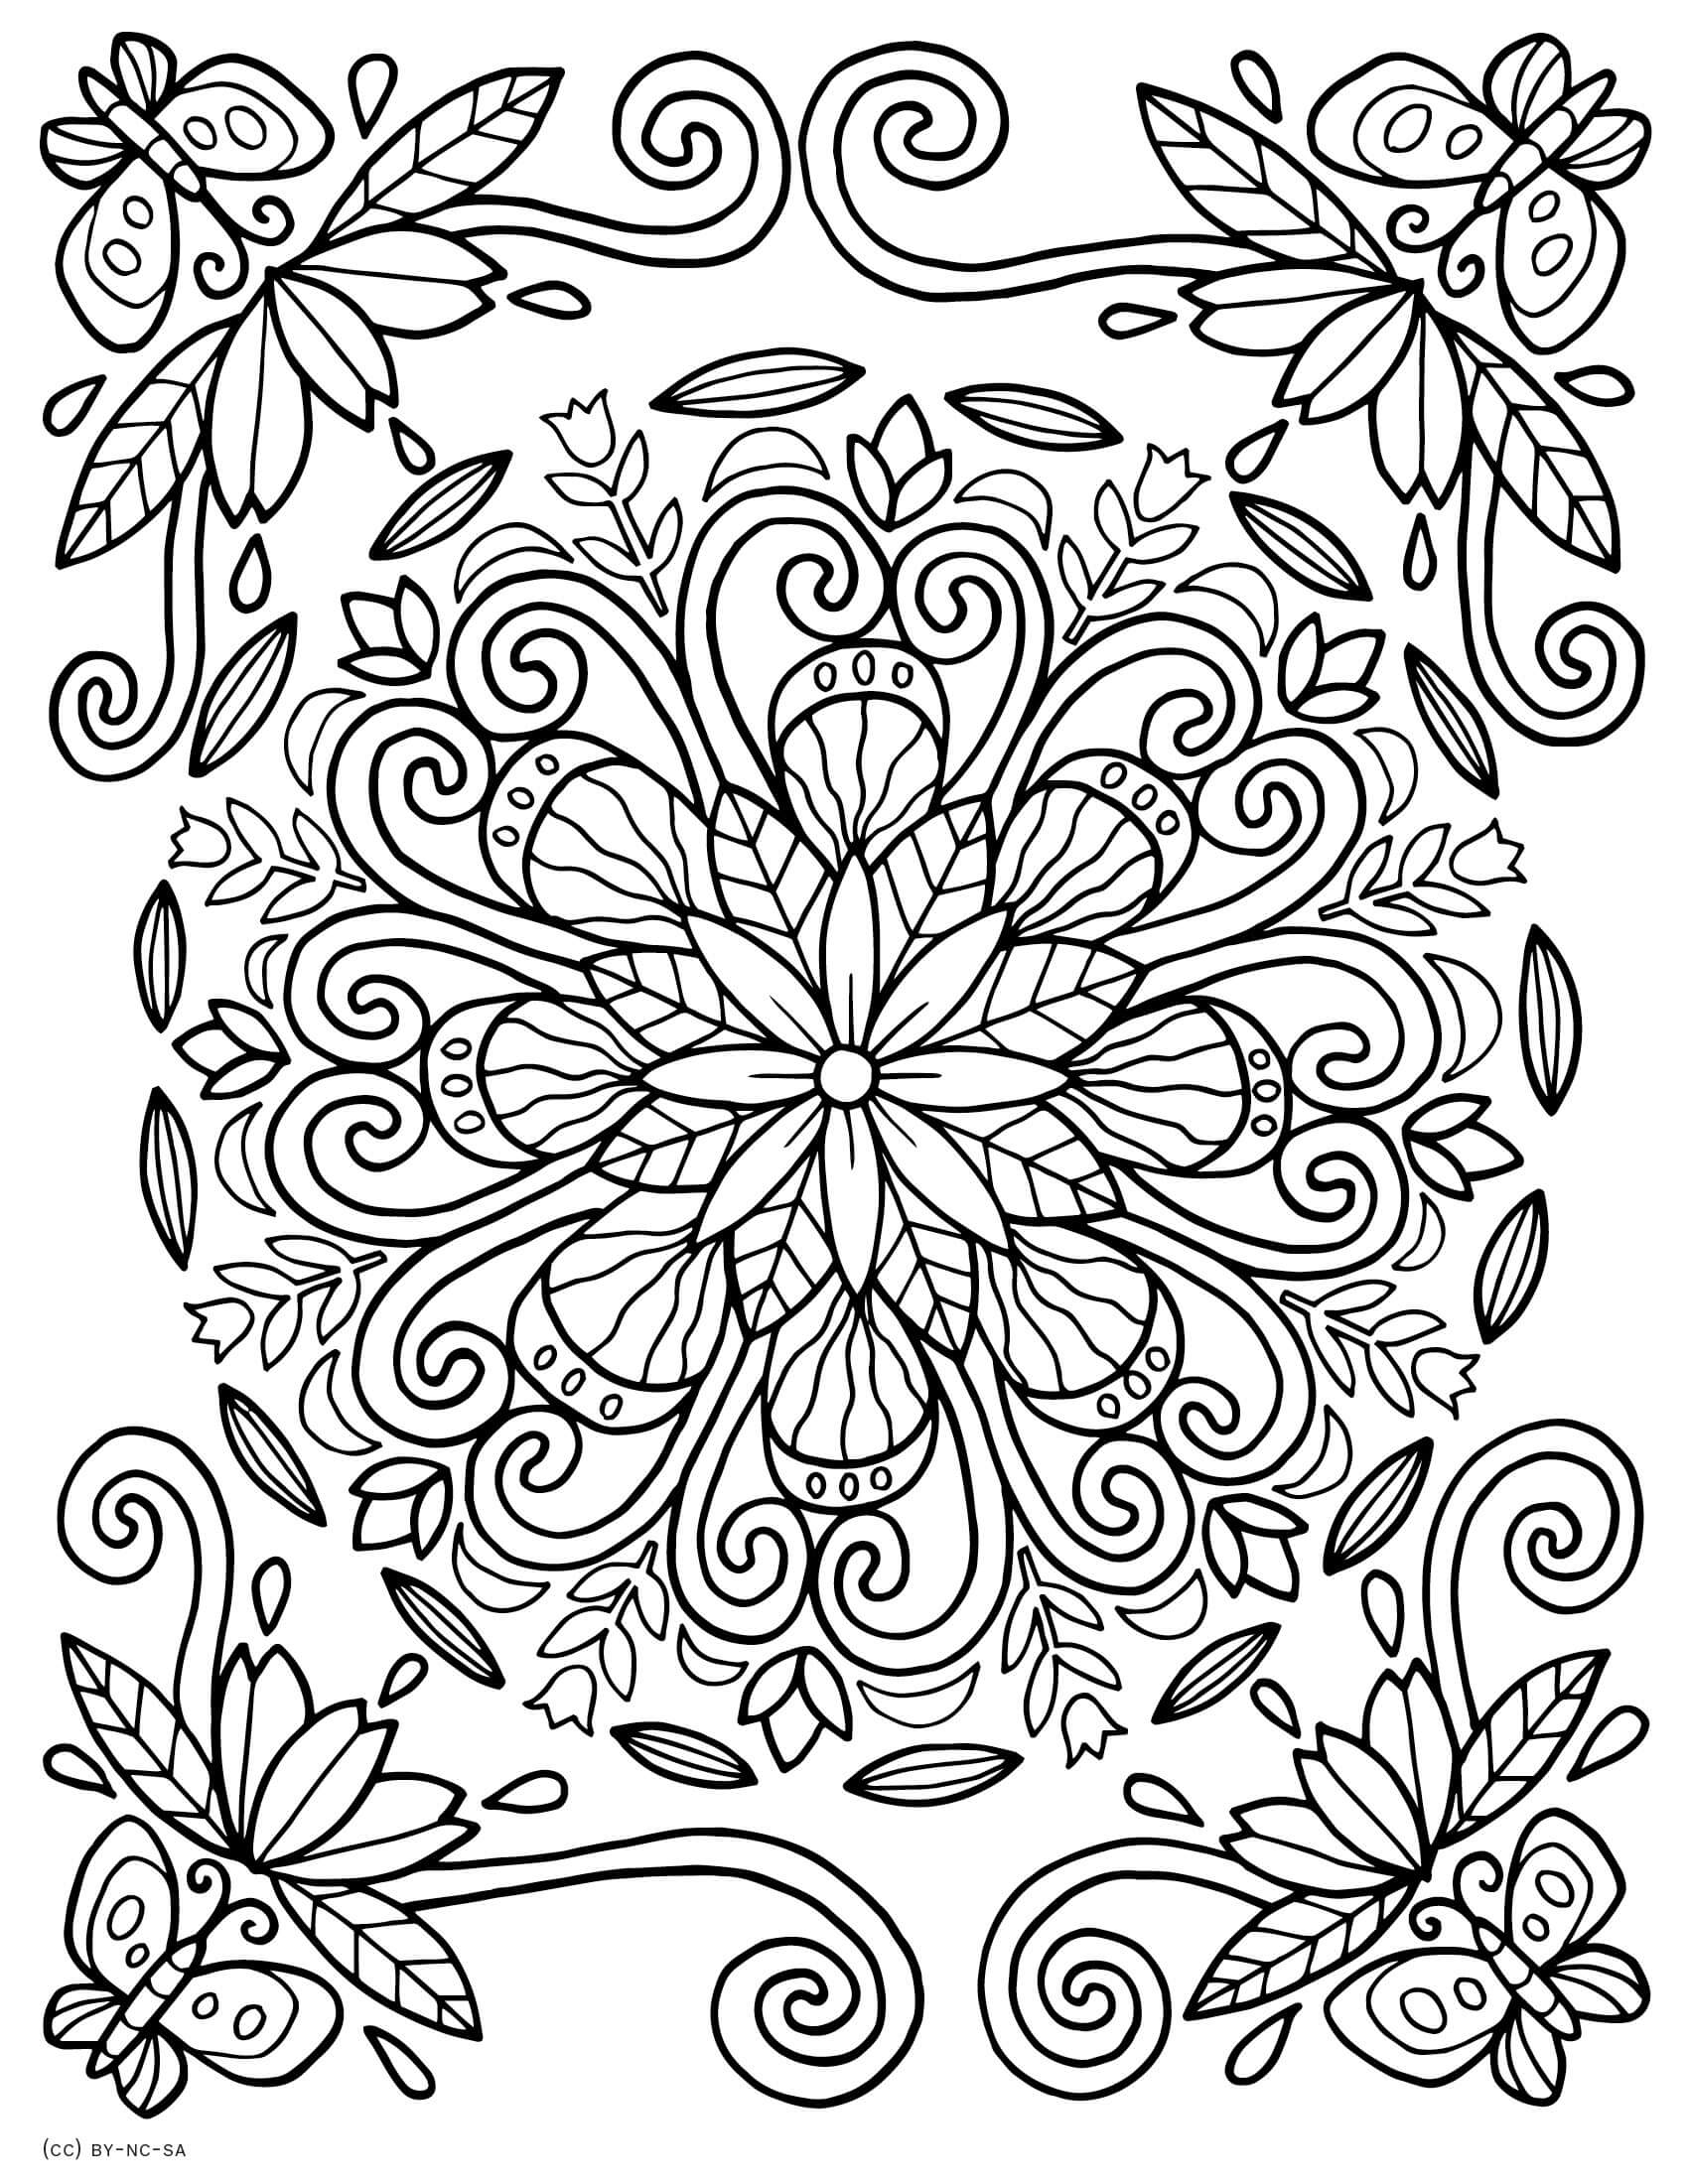 Mandala Spring Coloring Page - Sheet 3 Mandalas